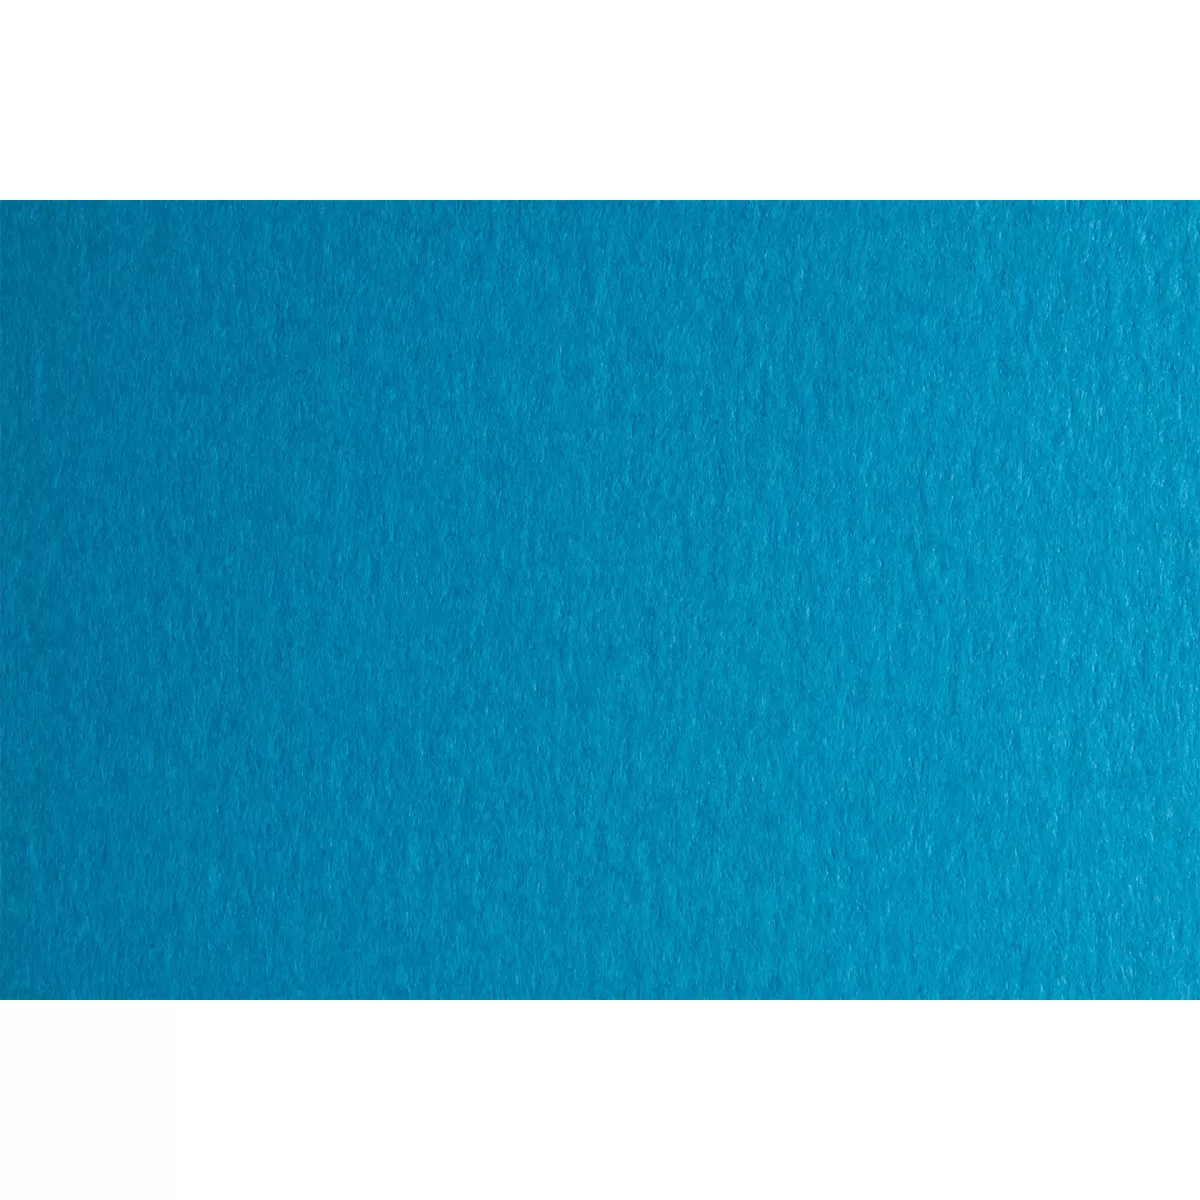 Fabriano Картон Colore, 50 x 70 cm, 140 g/m2, № 233, тъмносин